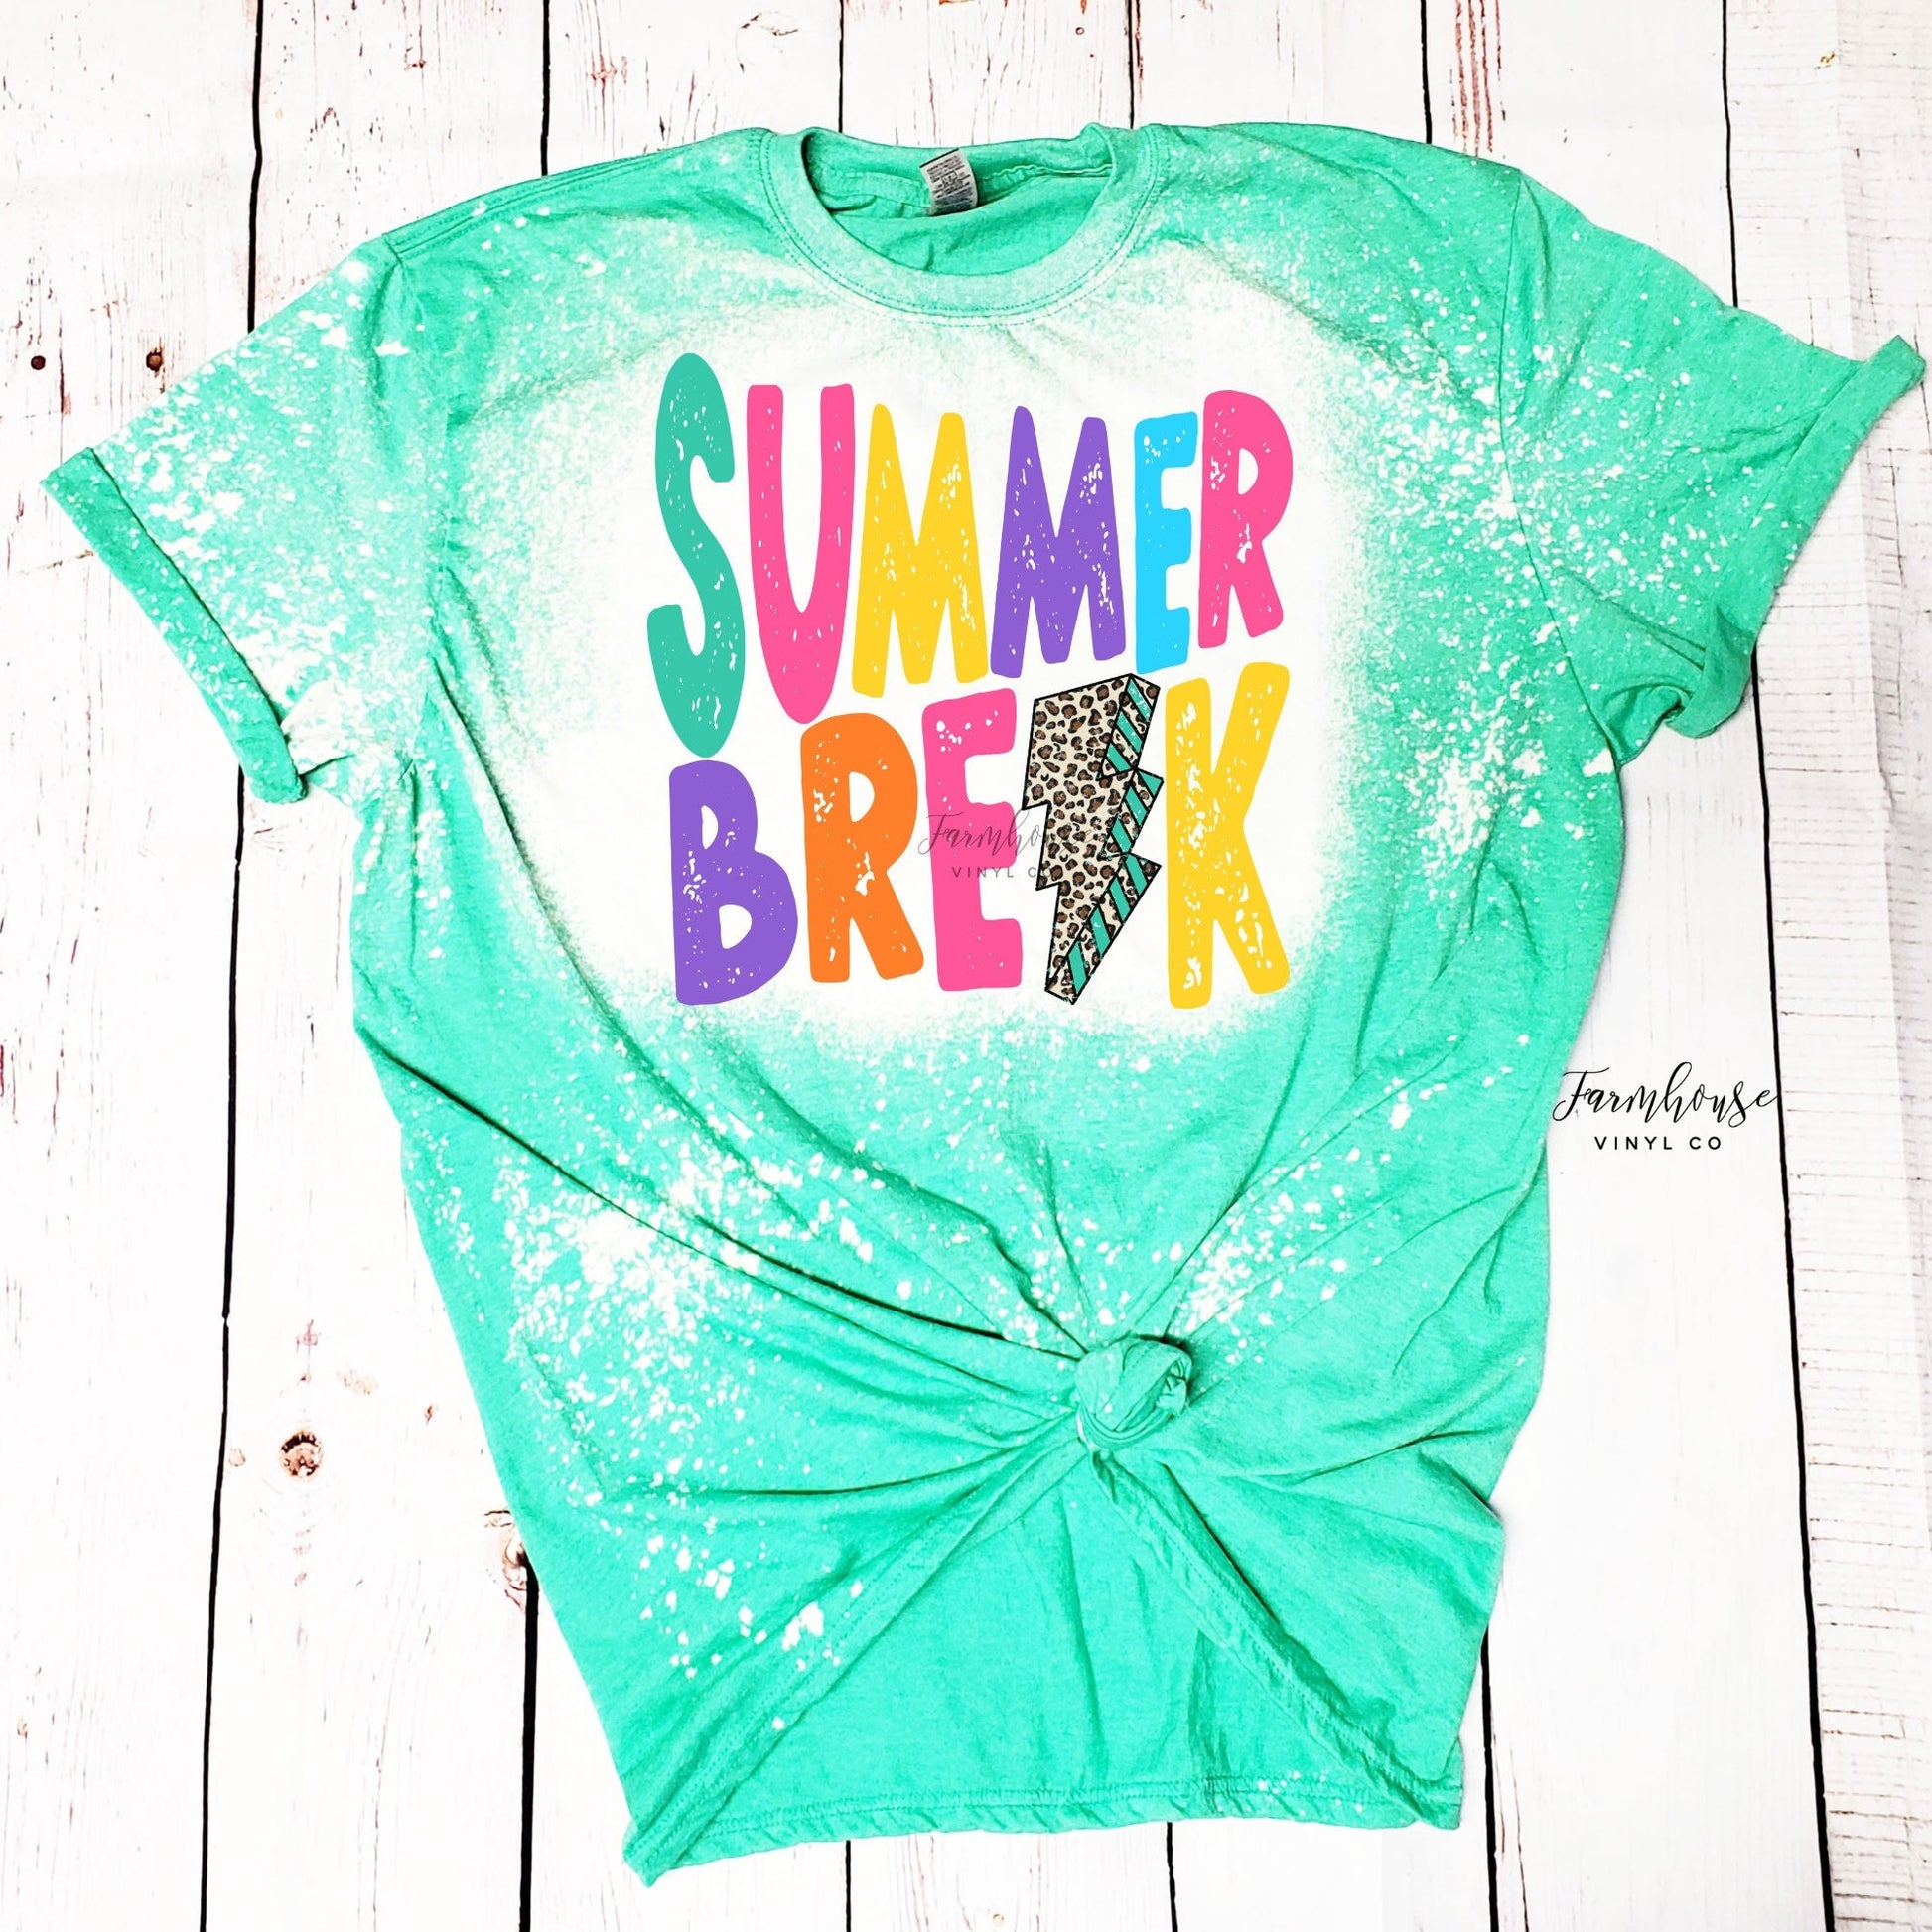 Summer Break Neon Shirt - Farmhouse Vinyl Co